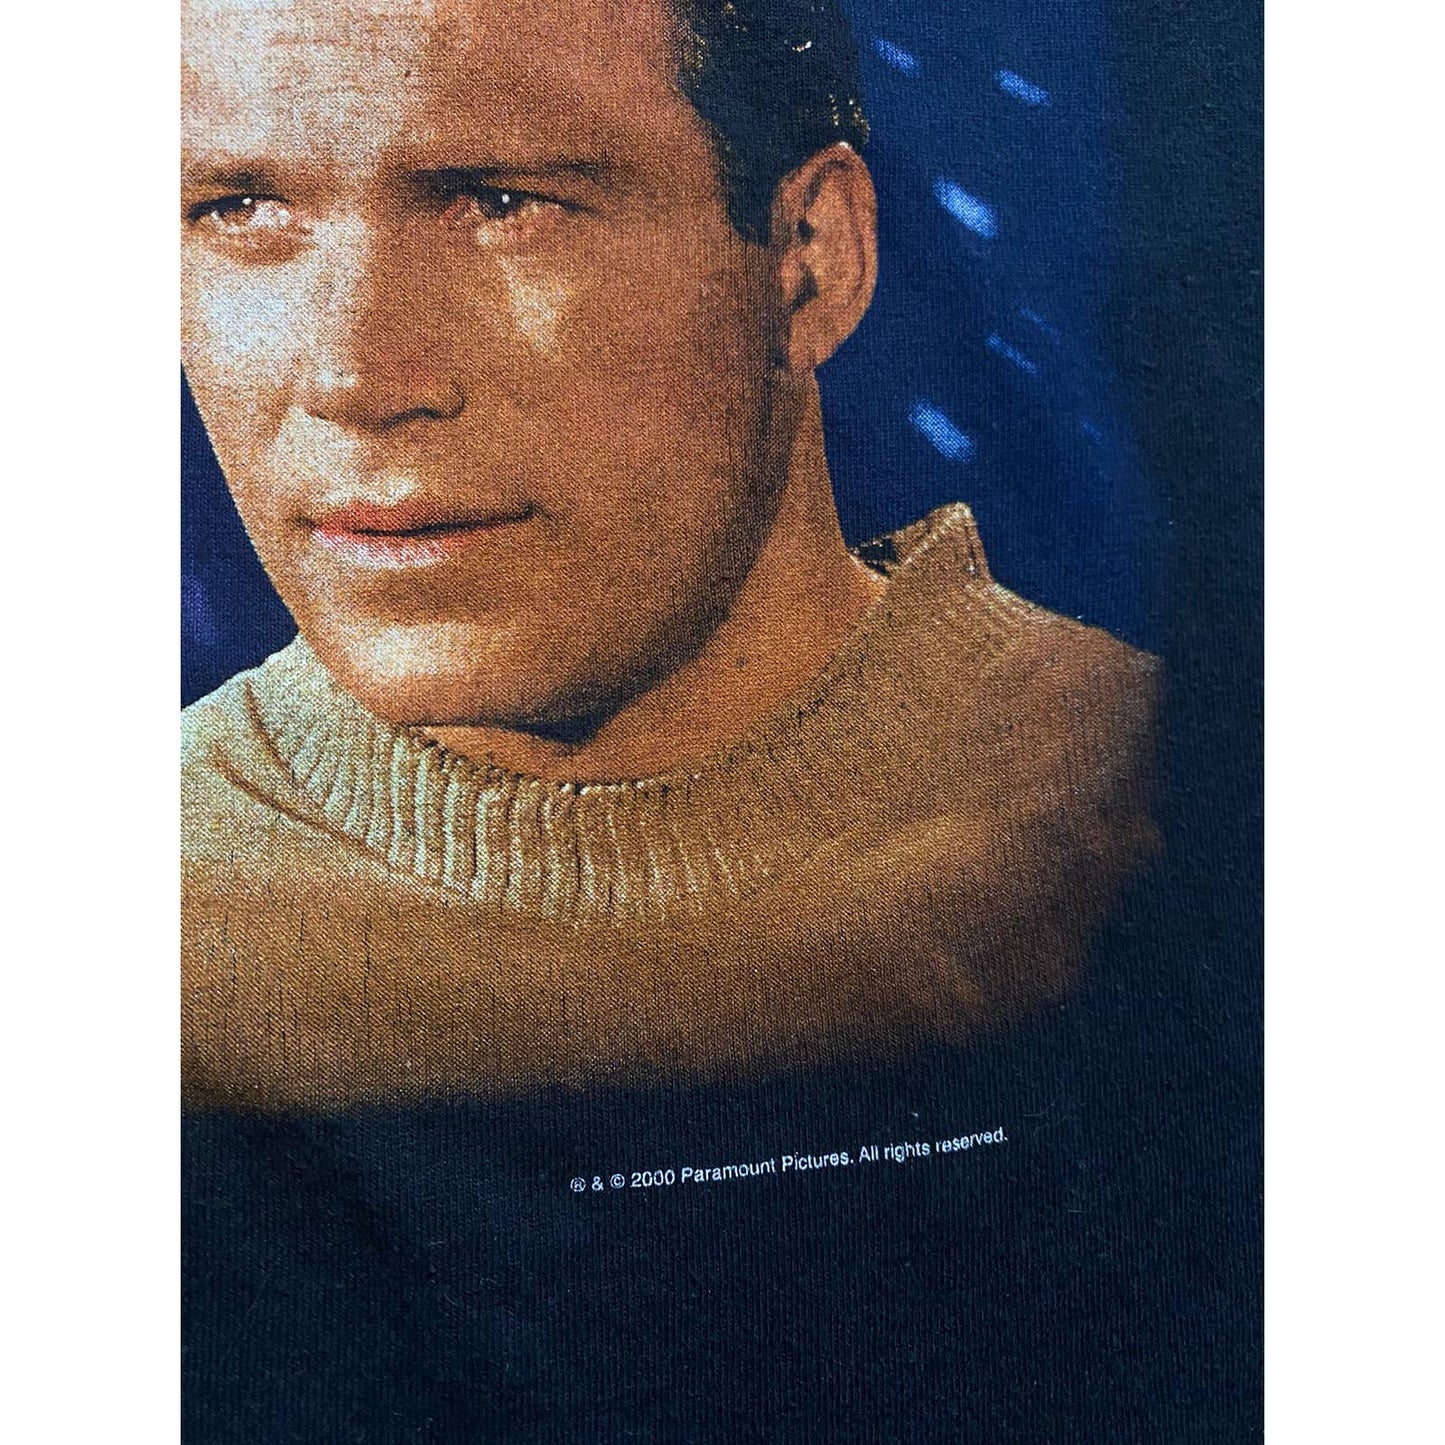 Star Trek 2000s movie tee vintage Captain James T. Kirk